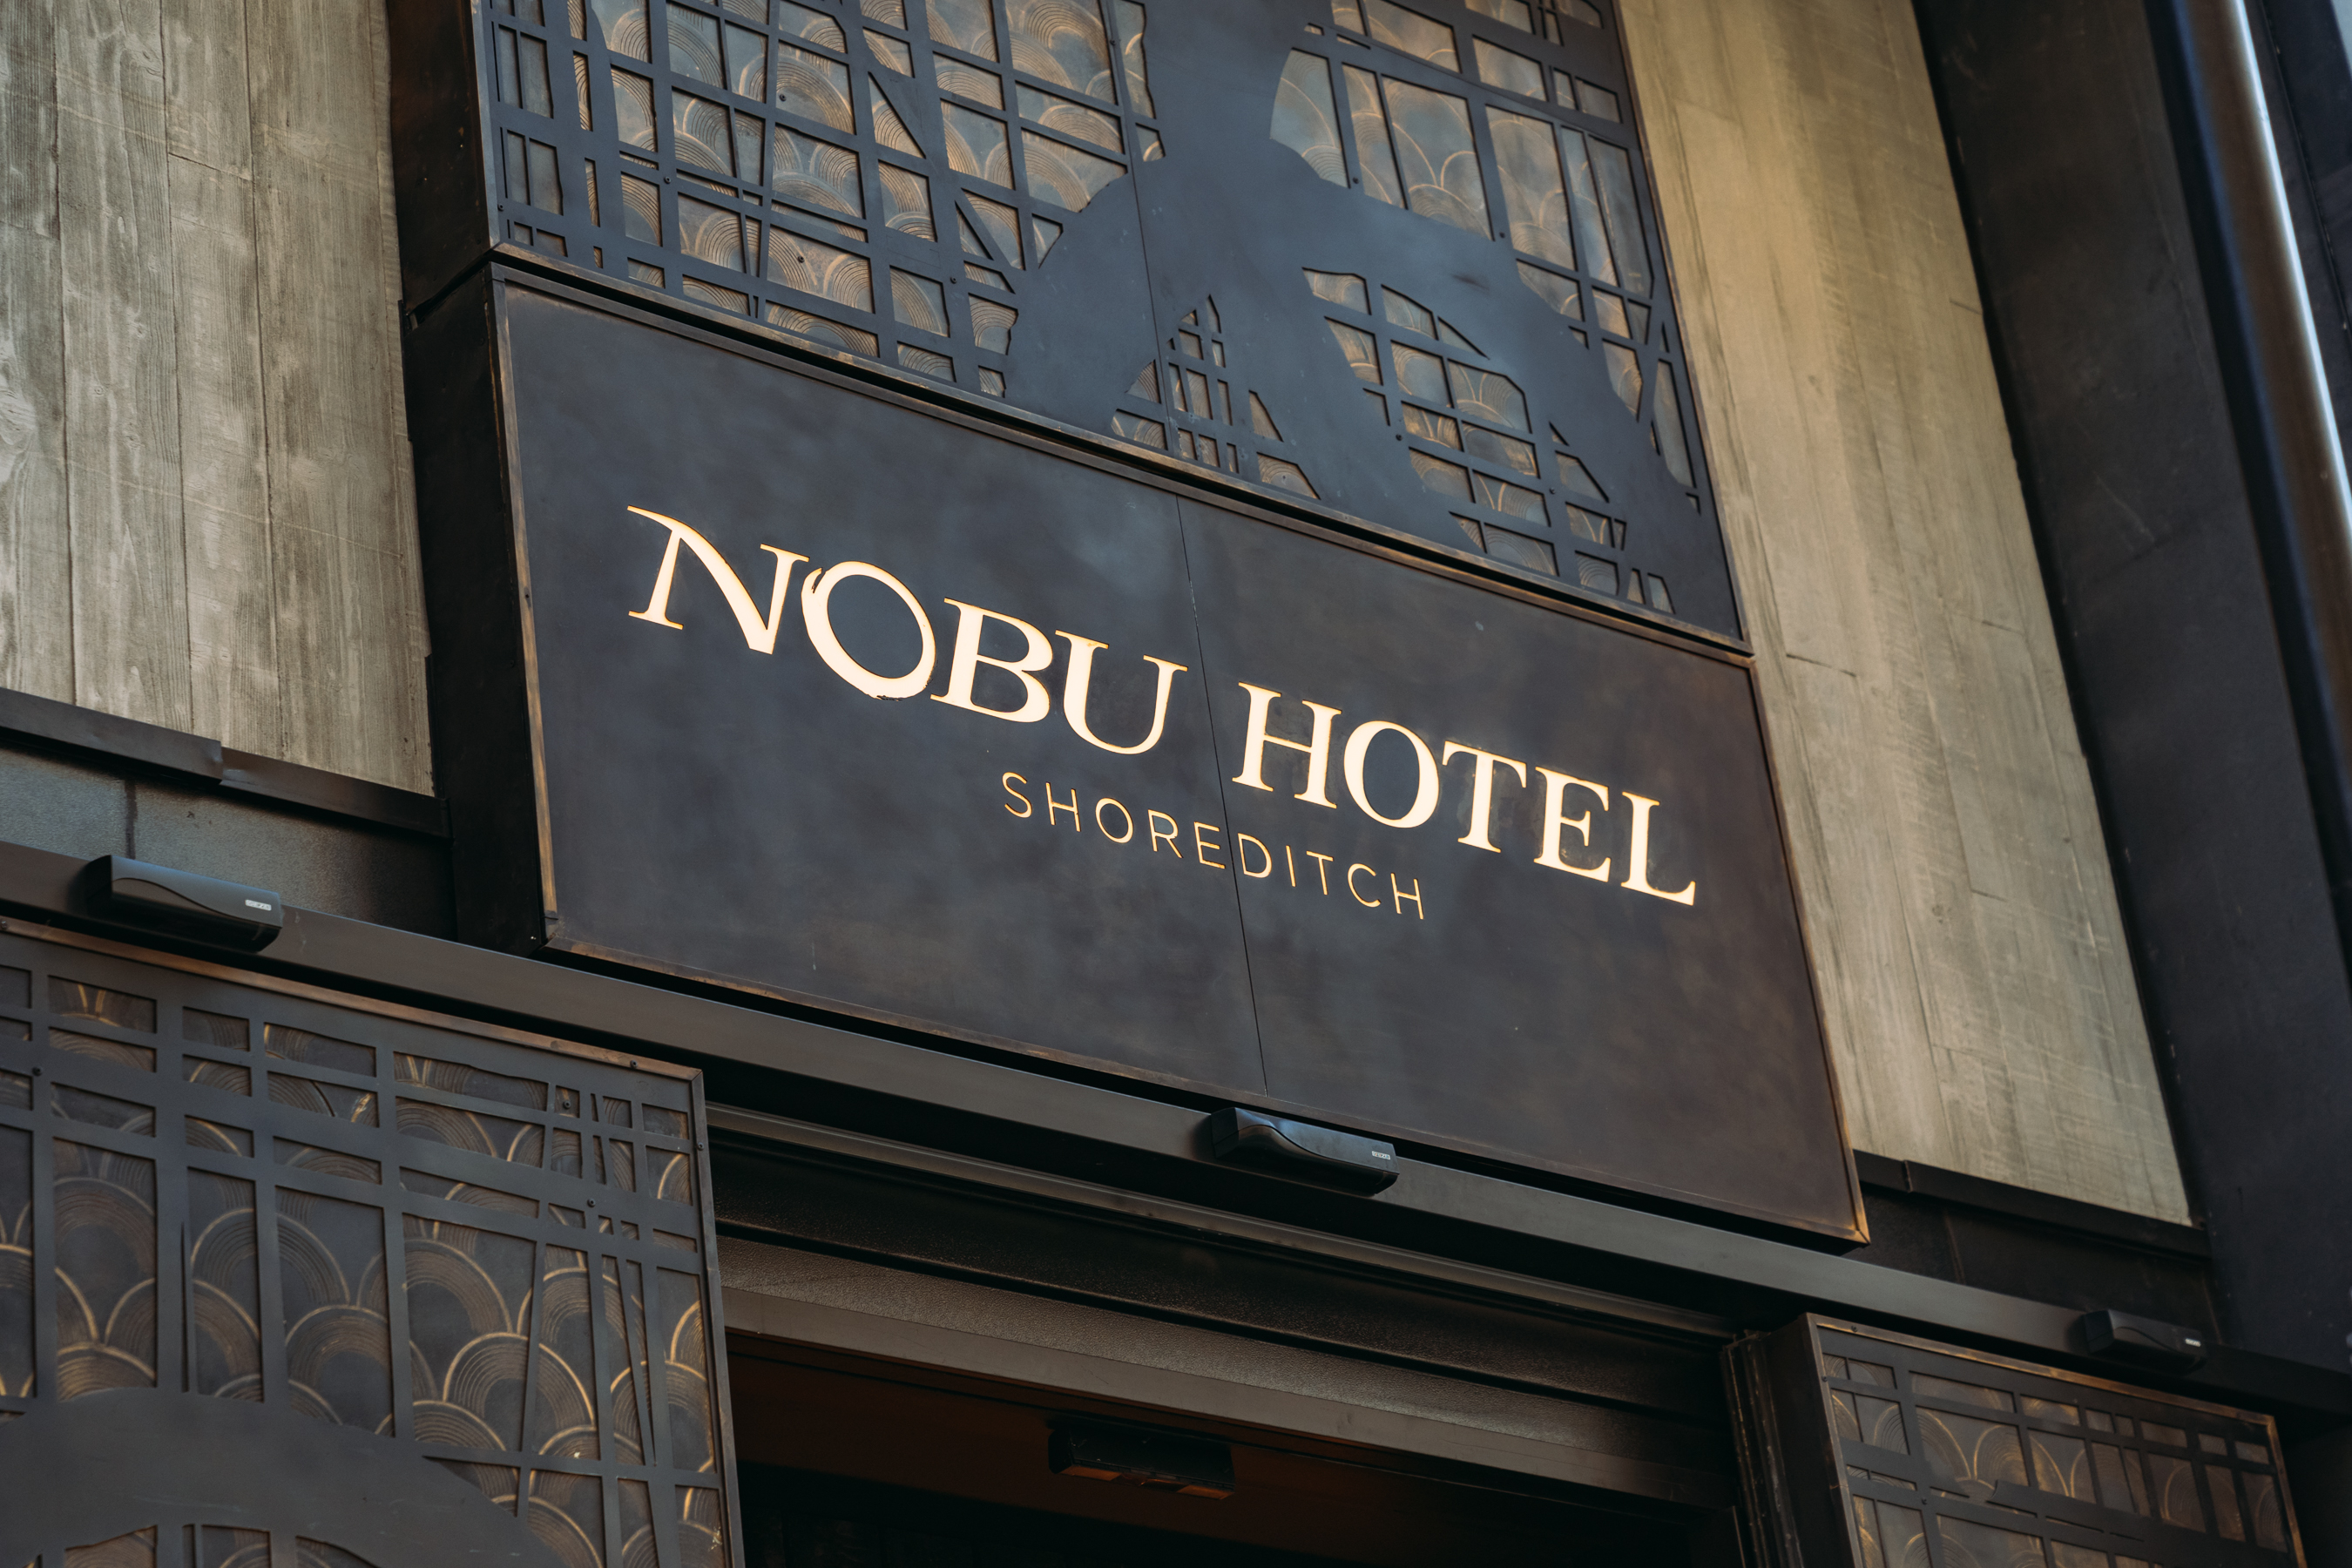 entrance from nobu hotel shoreditch